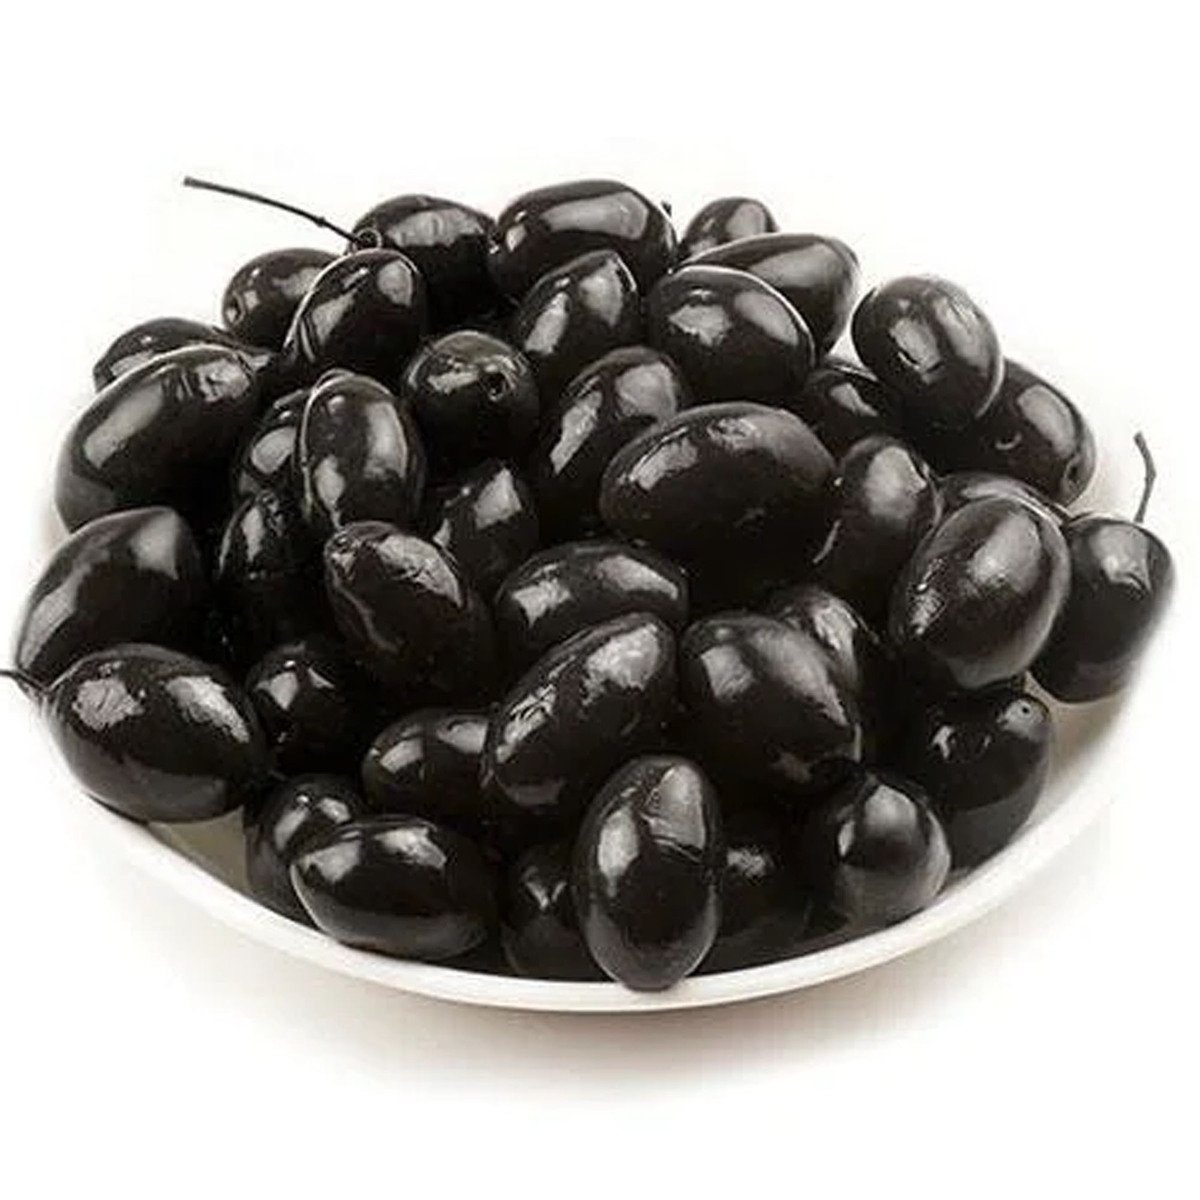 Syrian Black Kalamata Olives 300 g